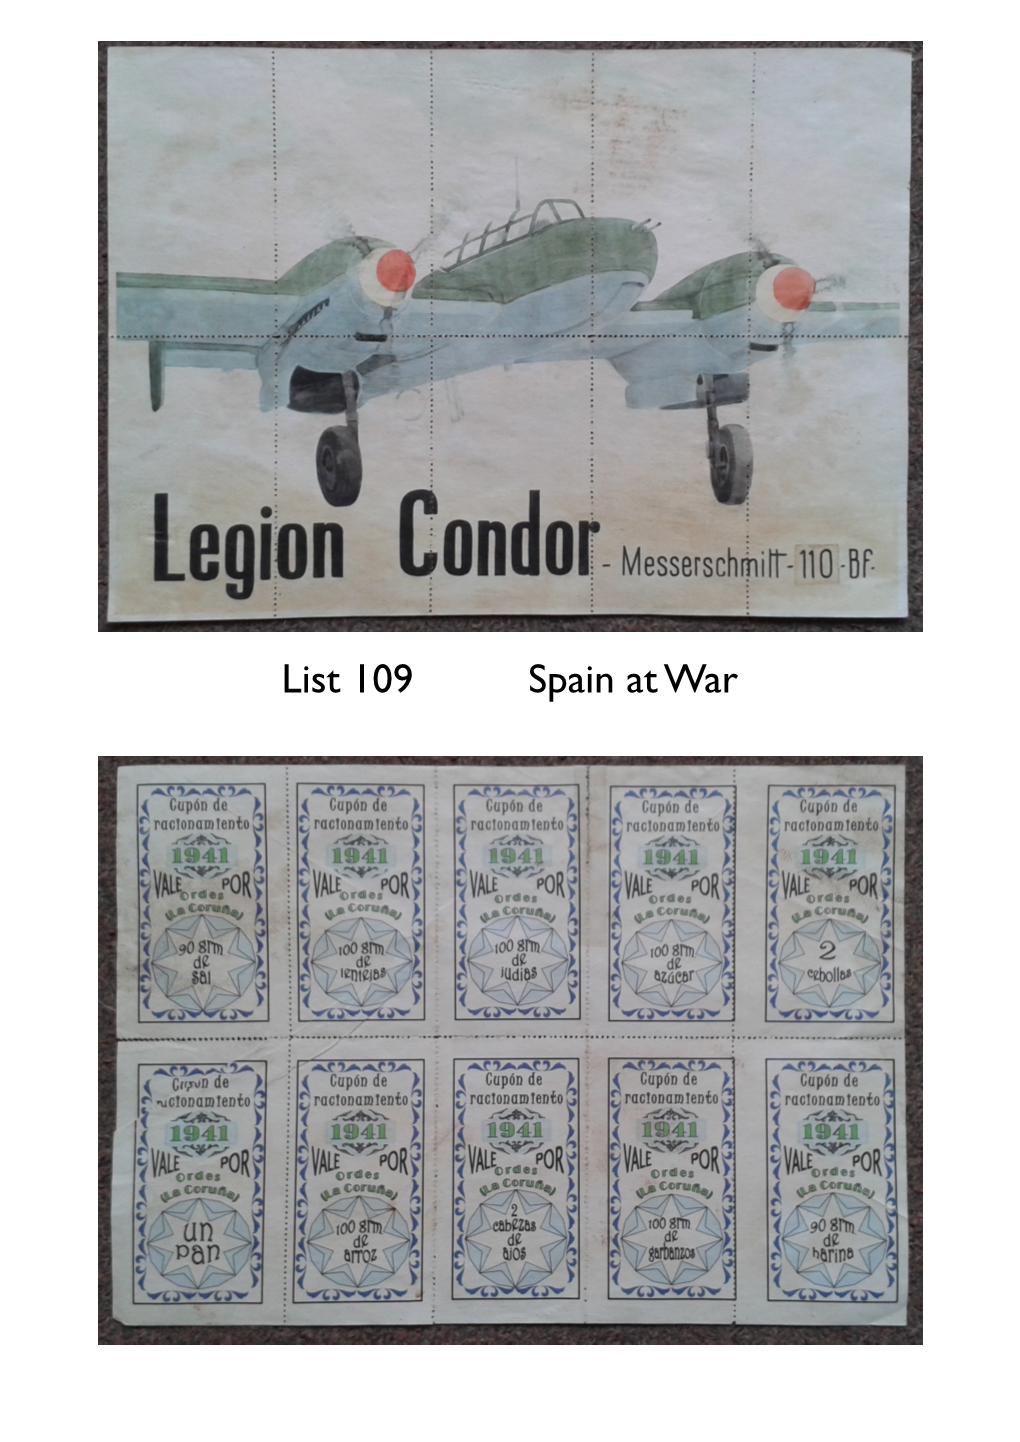 List 109 Spain at War [Spanish Civil War]